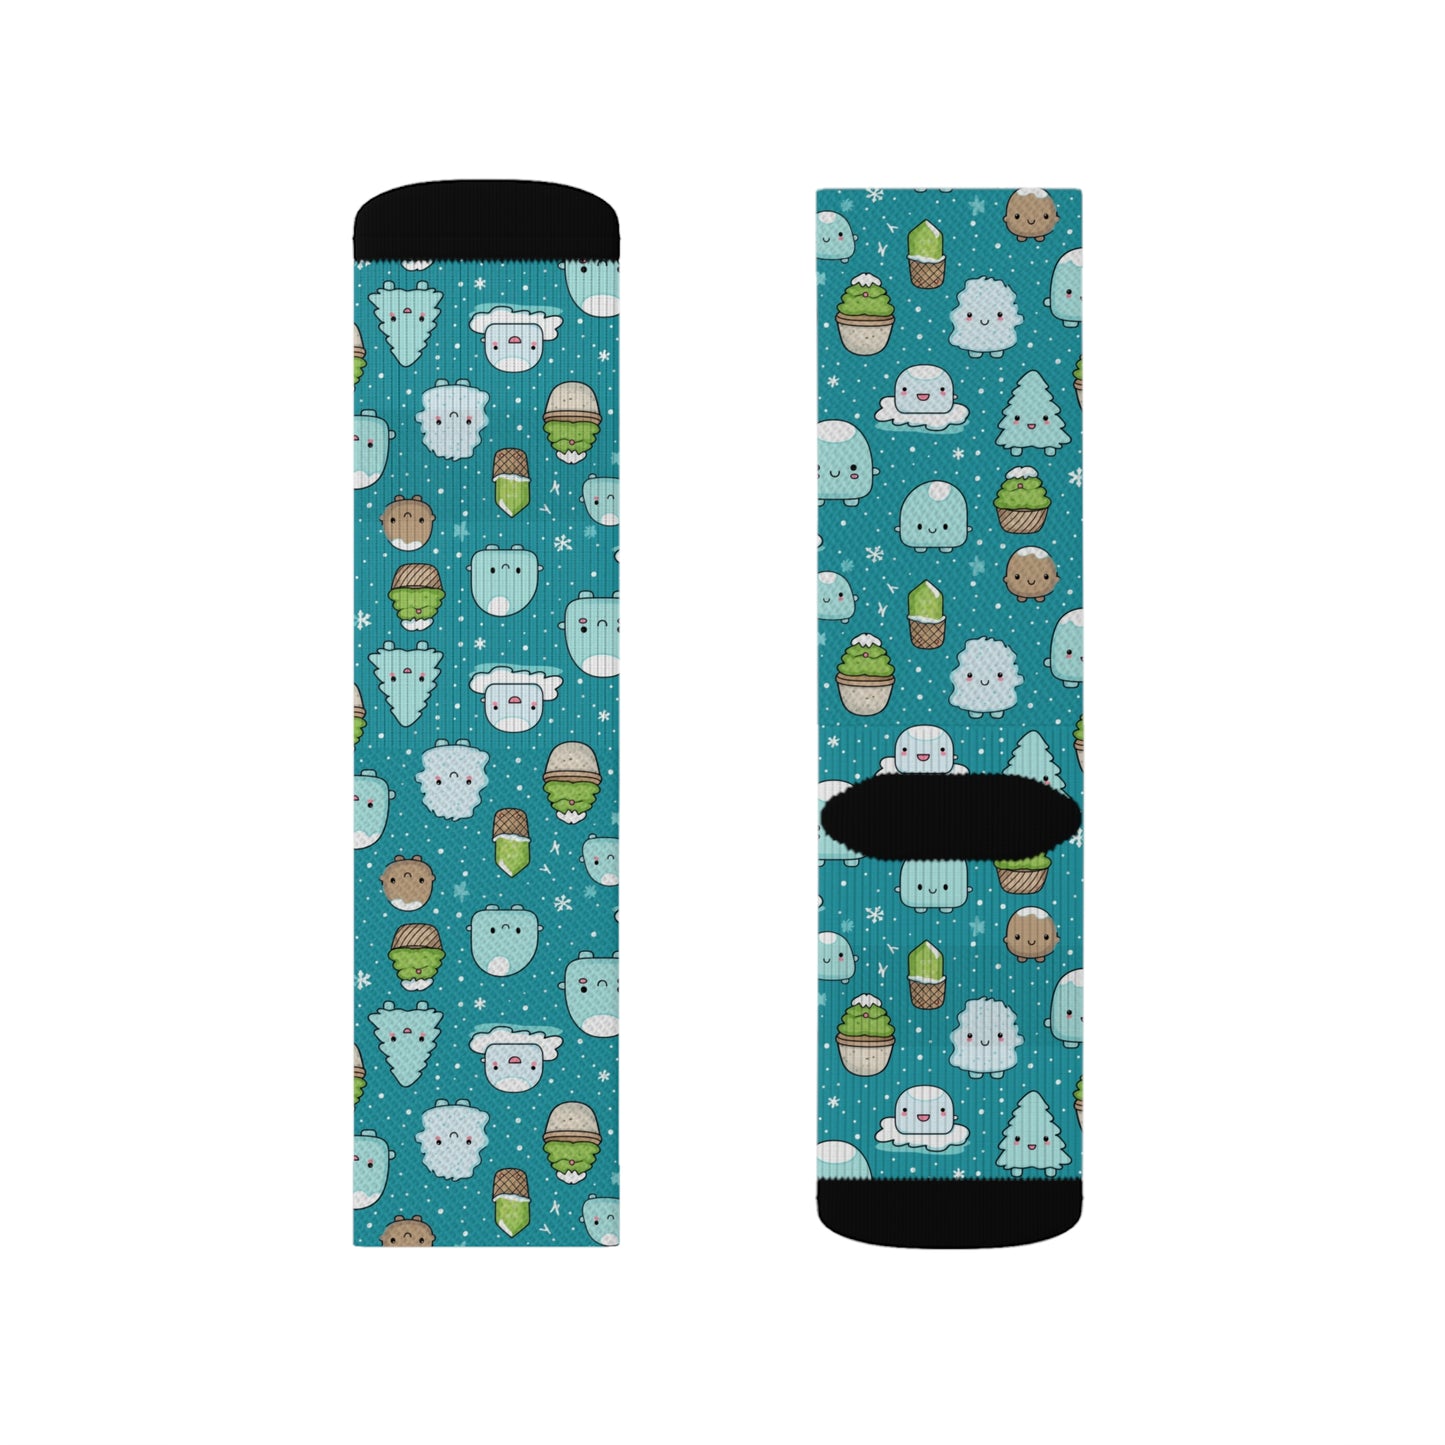 Kawaii Christmas Novelty Socks, Casual Funny Fun Socks, for Men & Women, Novelty Gift